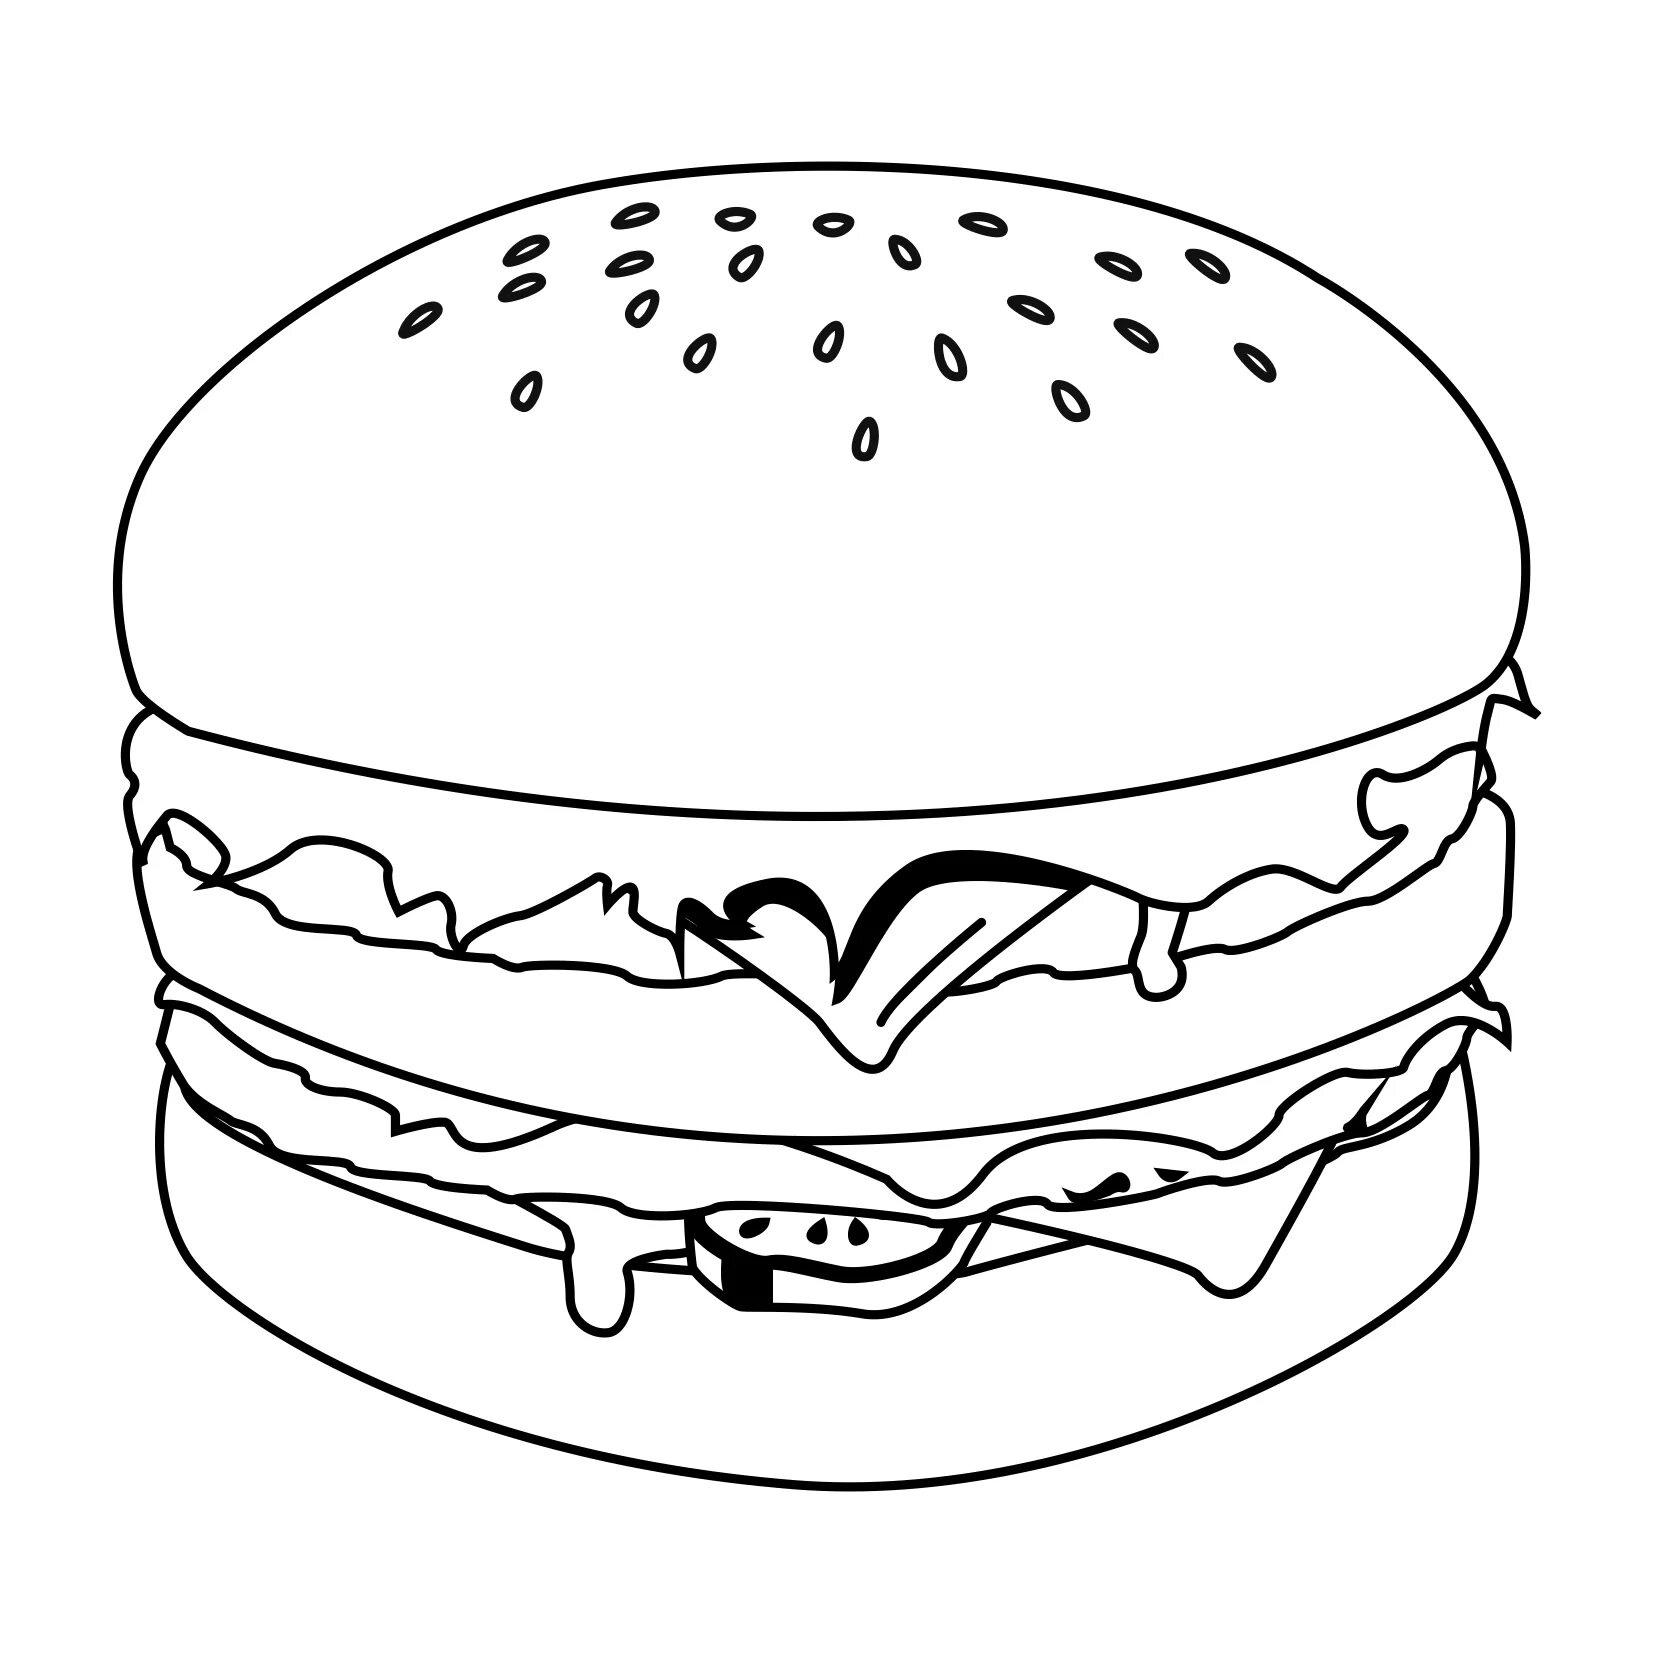 Happy cheeseburger coloring page